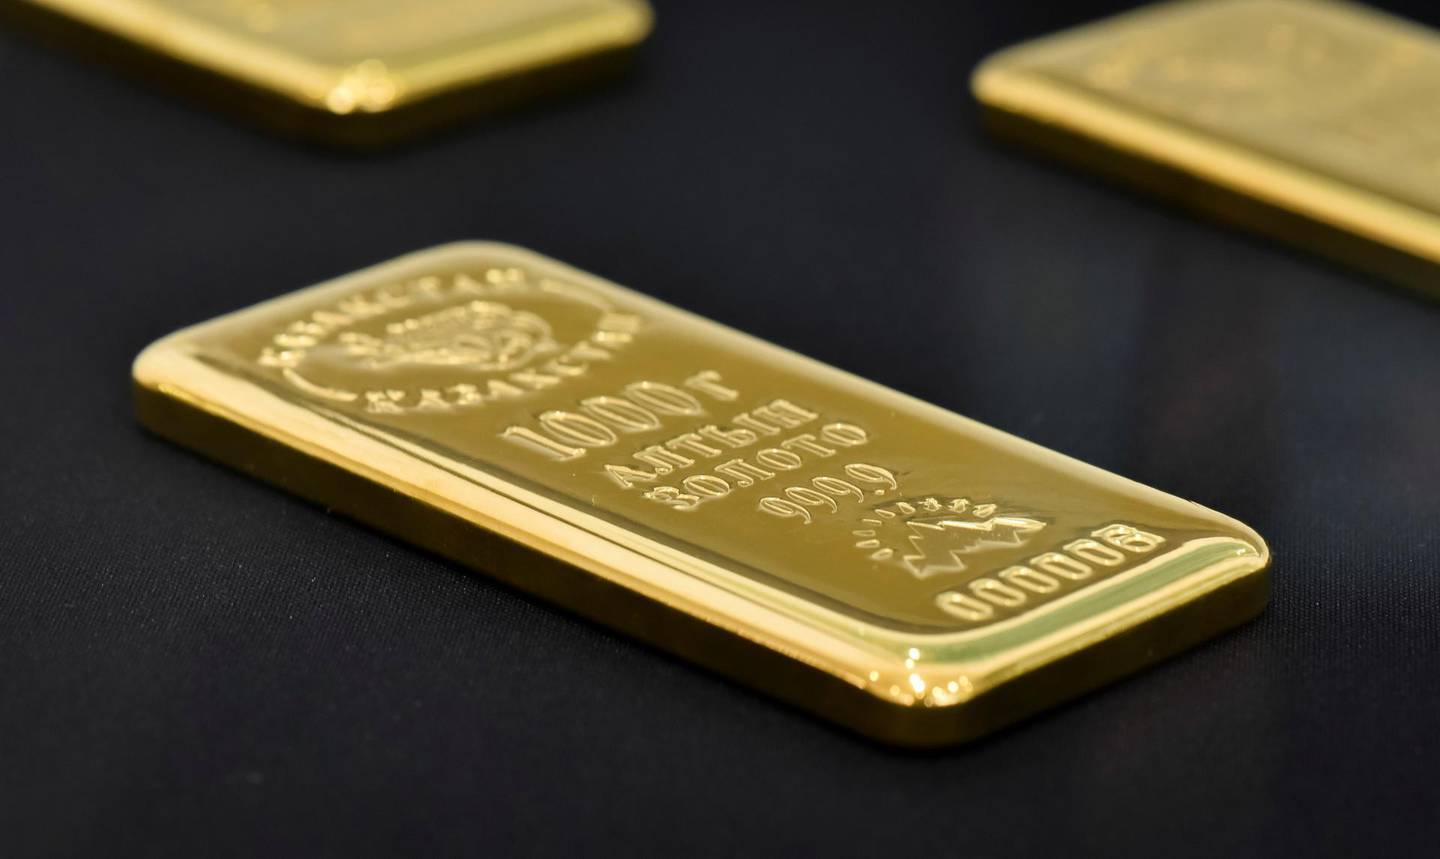 FILE PHOTO: A 1000 gram gold bar is seen at the Kazakhstan's National Bank vault in Almaty, Kazakhstan September 15, 2017. REUTERS/Mariya Gordeyeva/File Photo